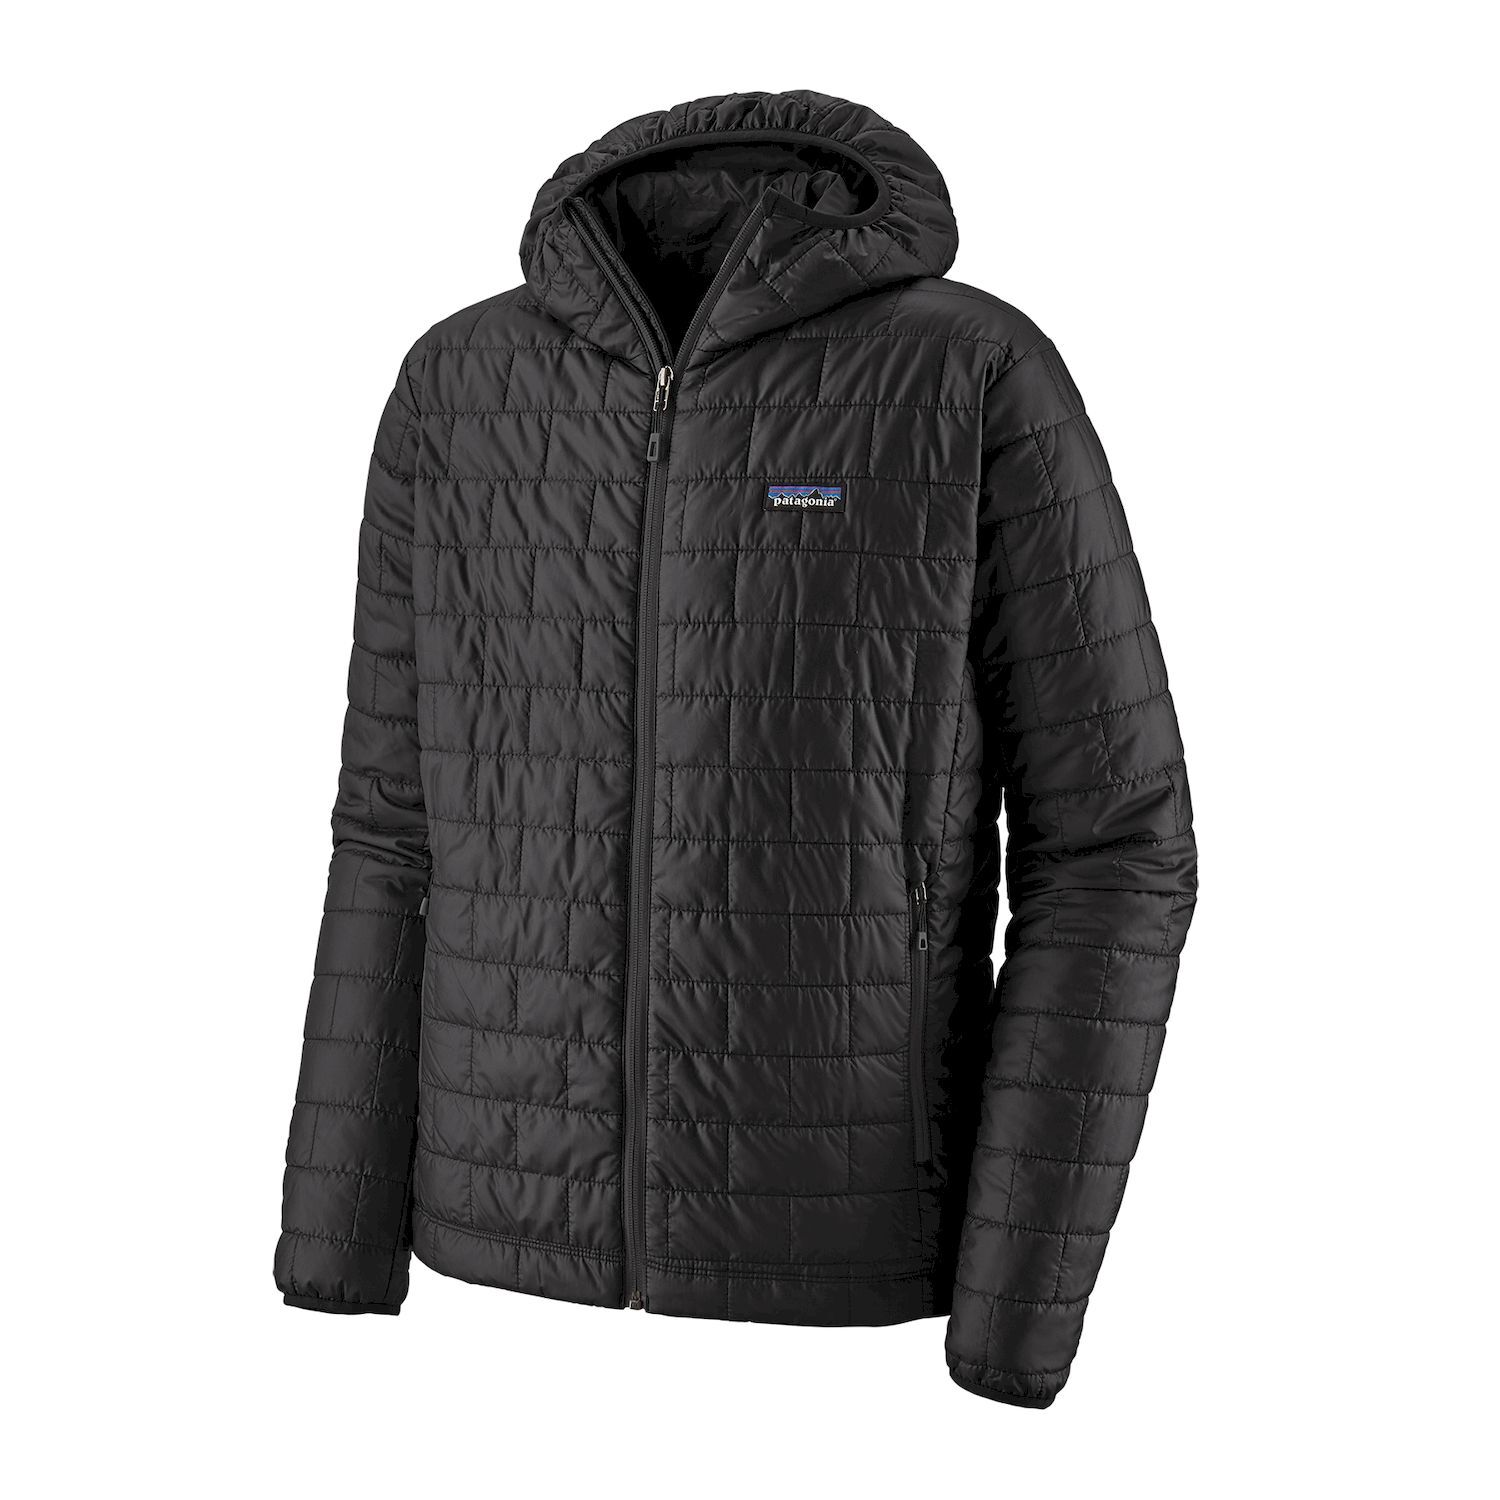 Patagonia - Nano Puff® Hoody - Insulated jacket - Men's